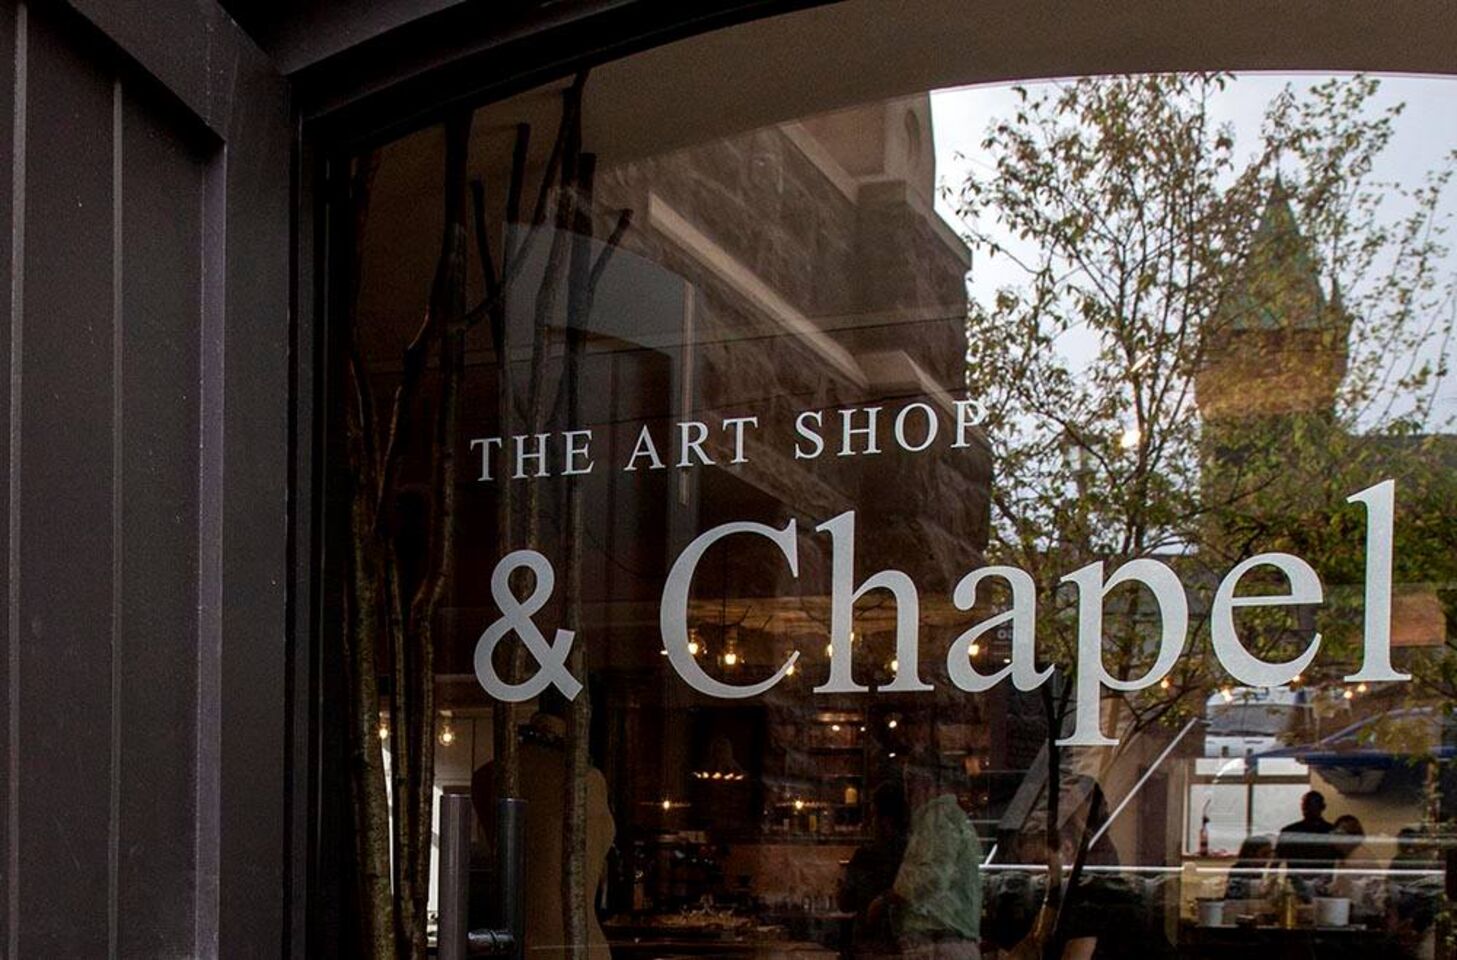 A photo of The Art Shop & Chapel